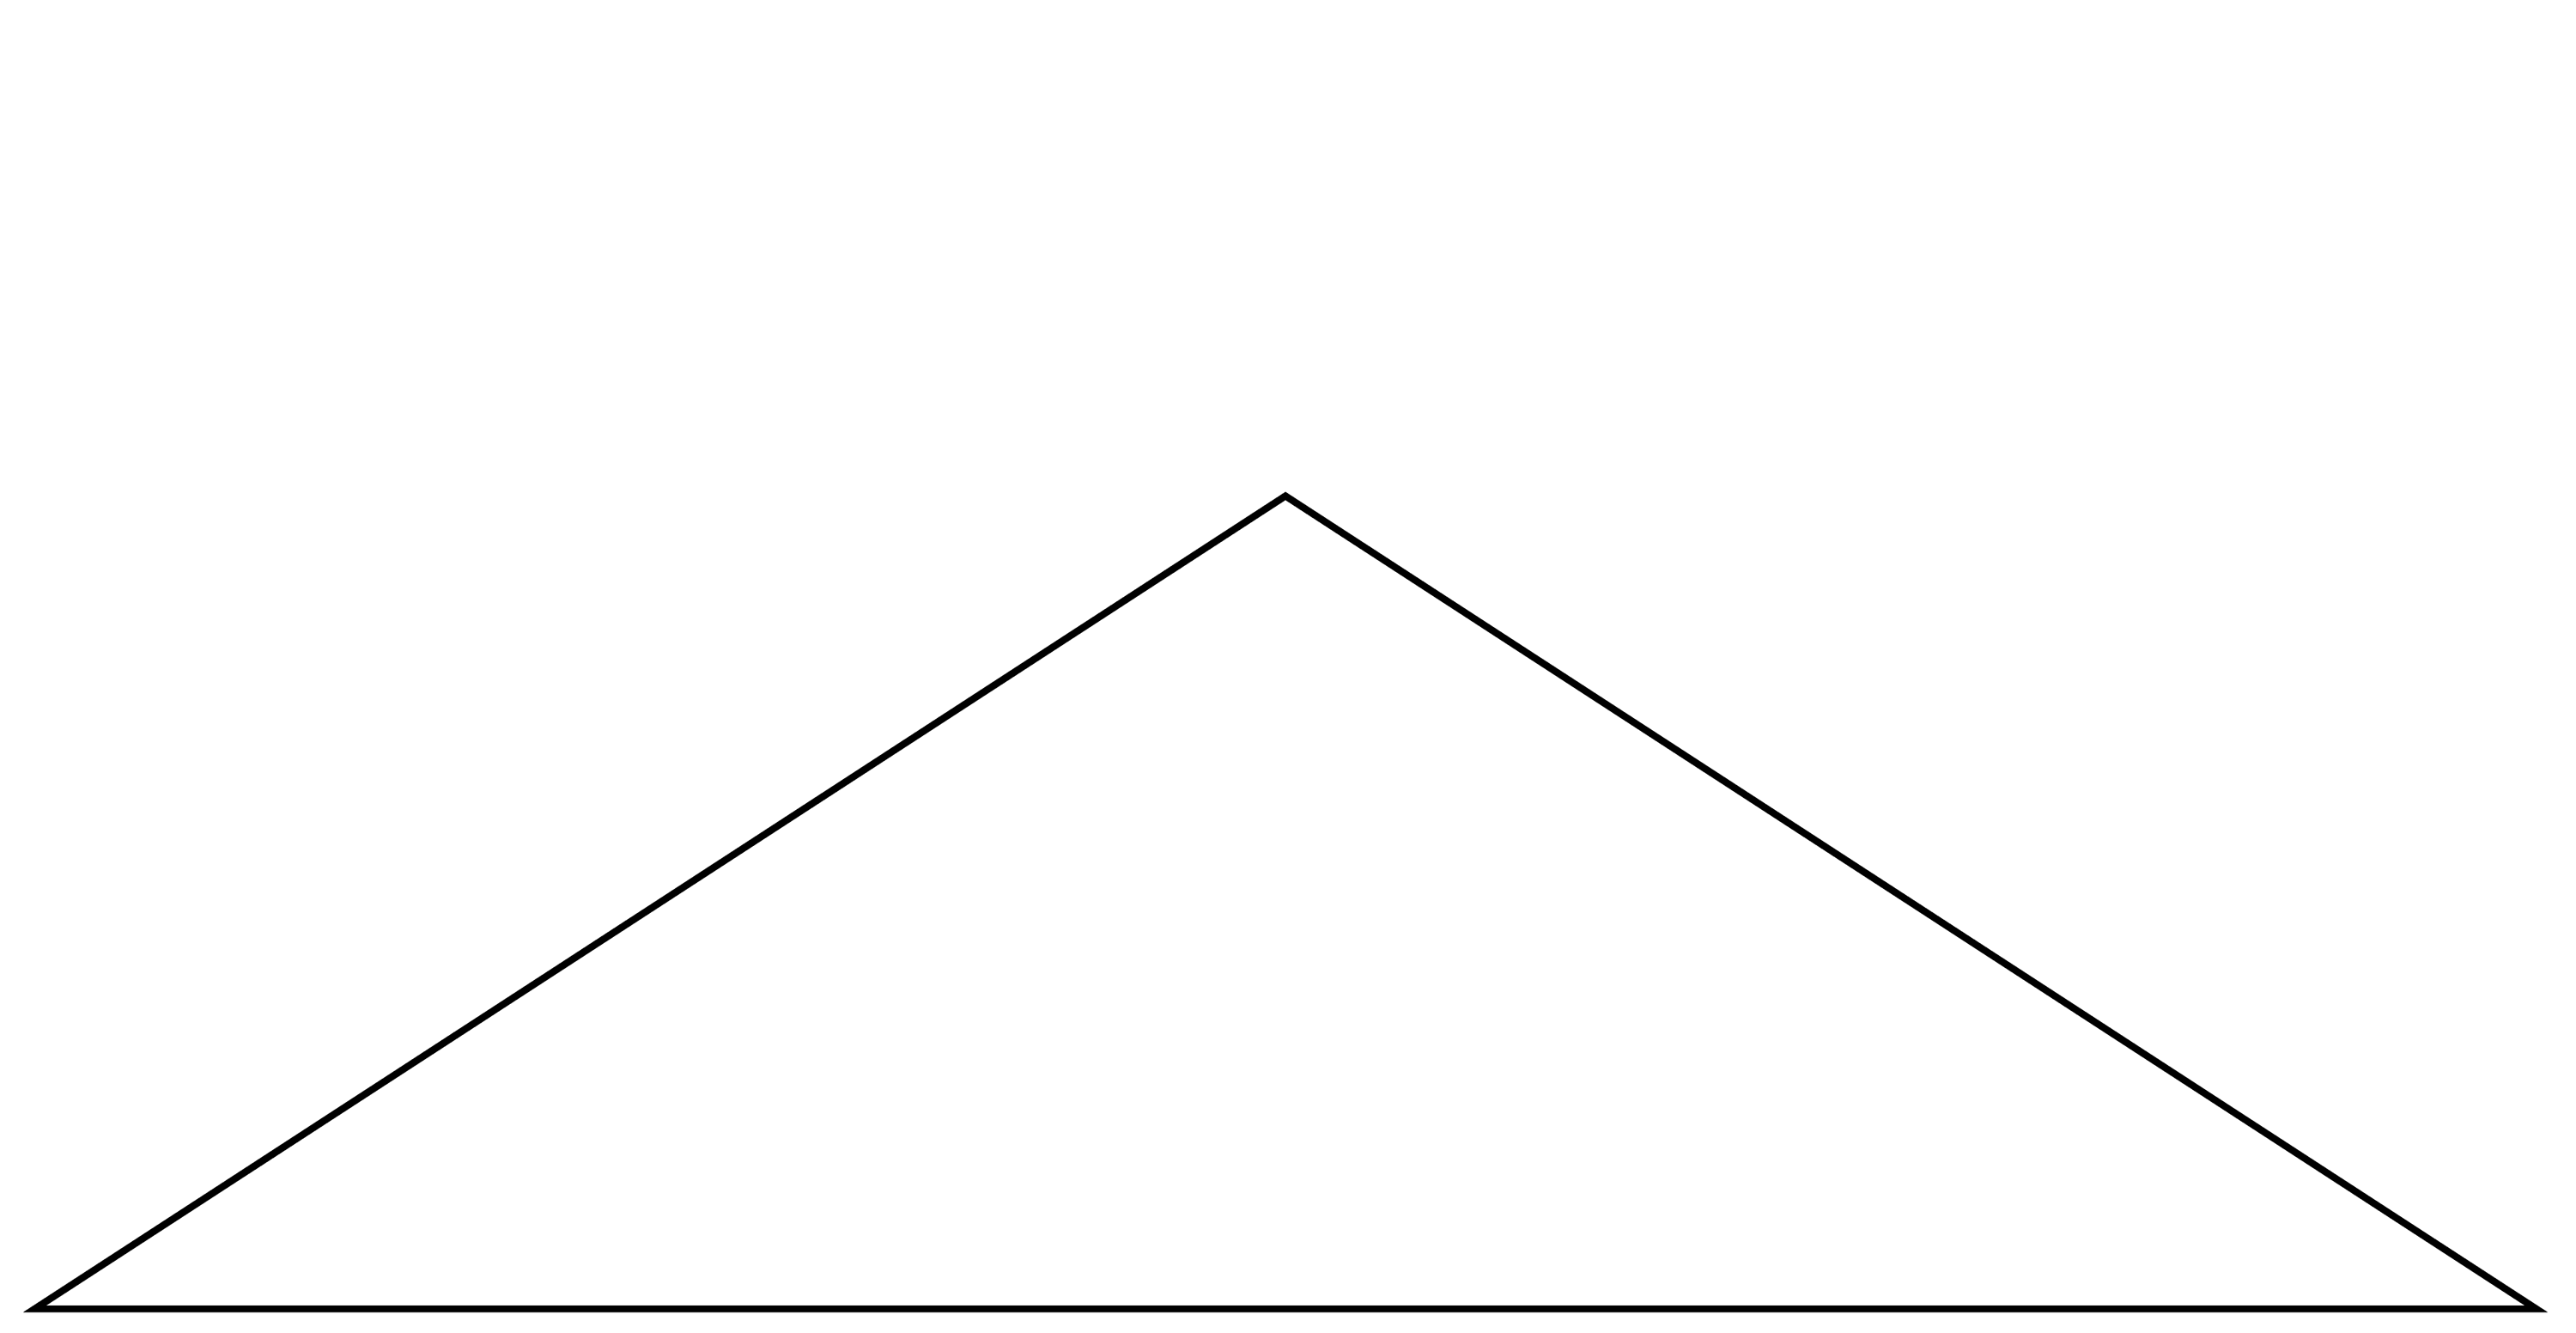 Isosceles Triangle Degrees 114  33  33